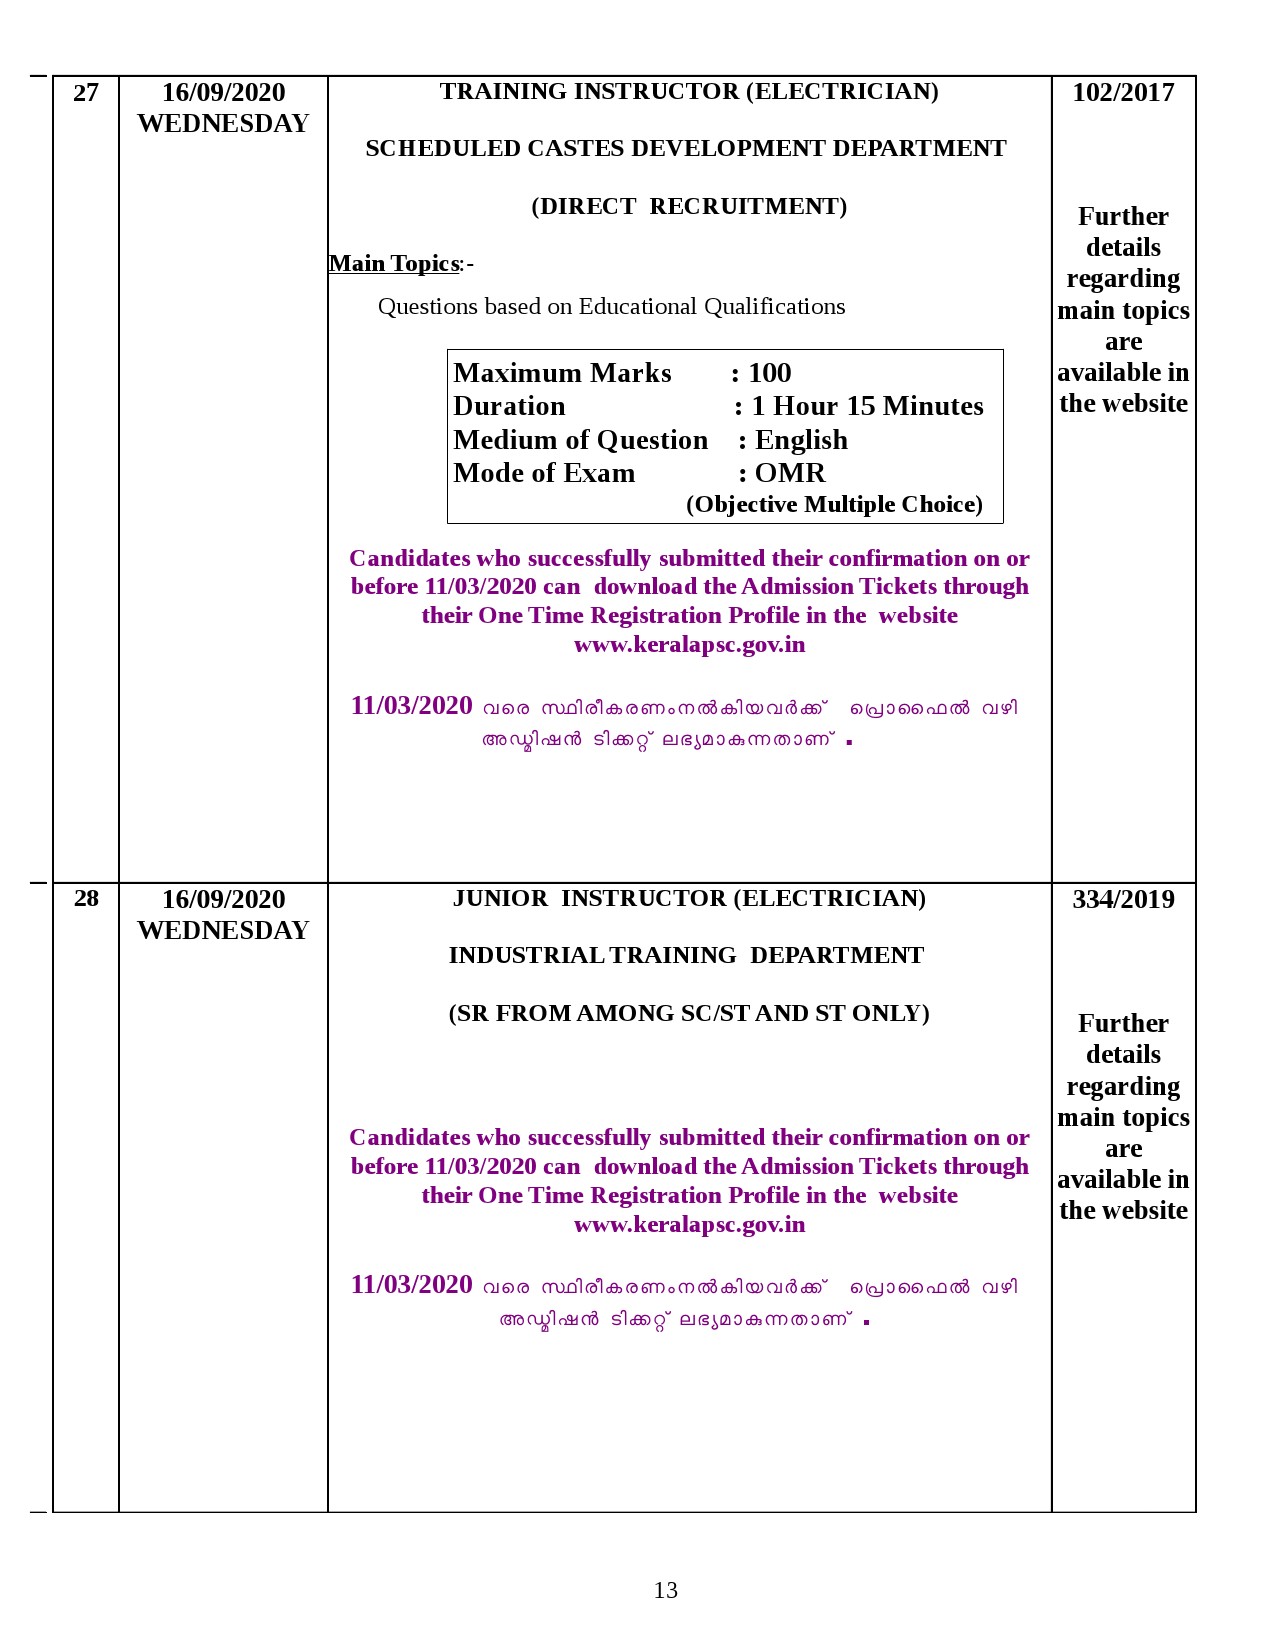 Kerala PSC Exam Calendar September 2020 - Notification Image 13